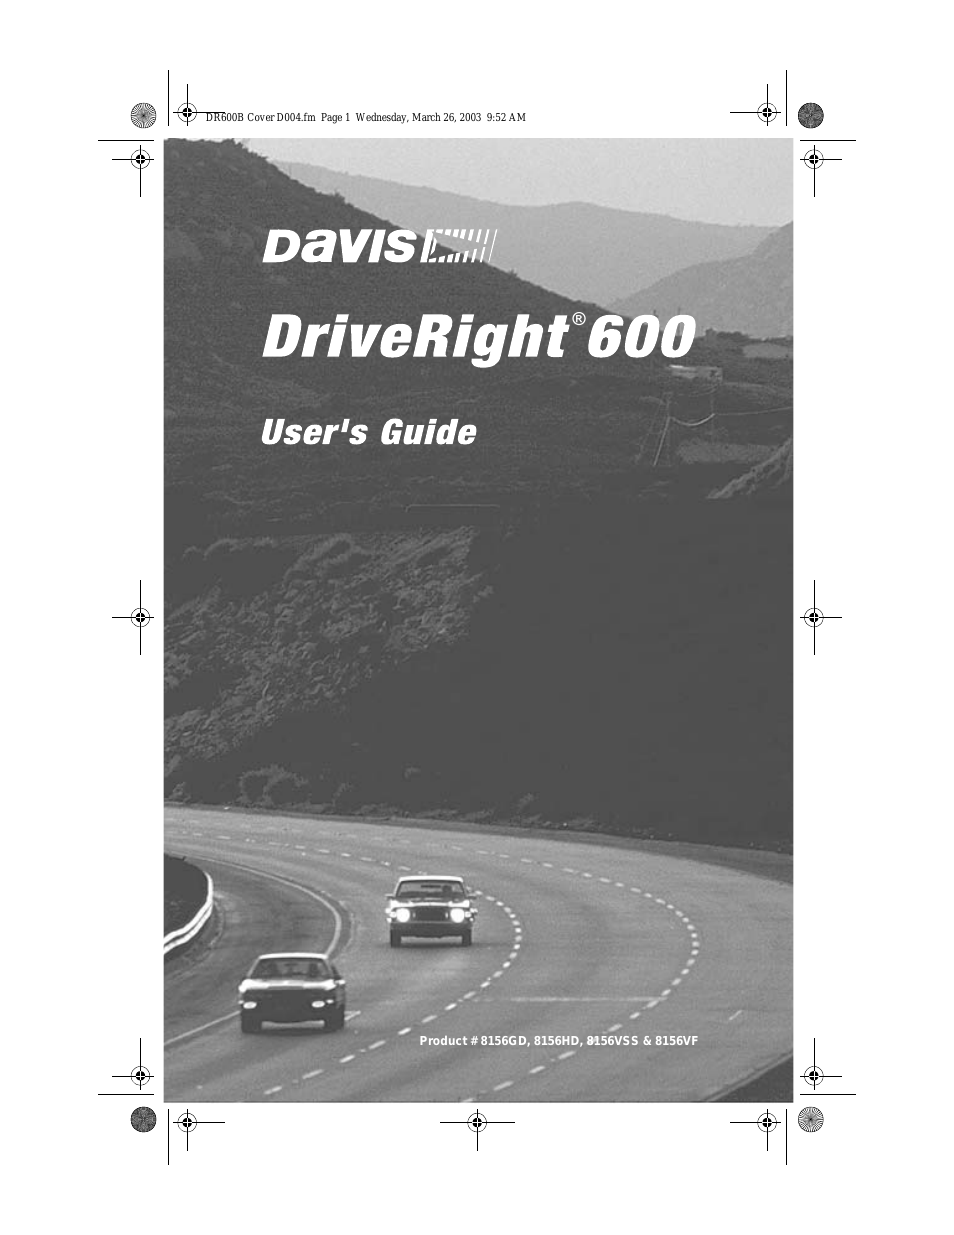 DRIVERIGHT 600 8156VF